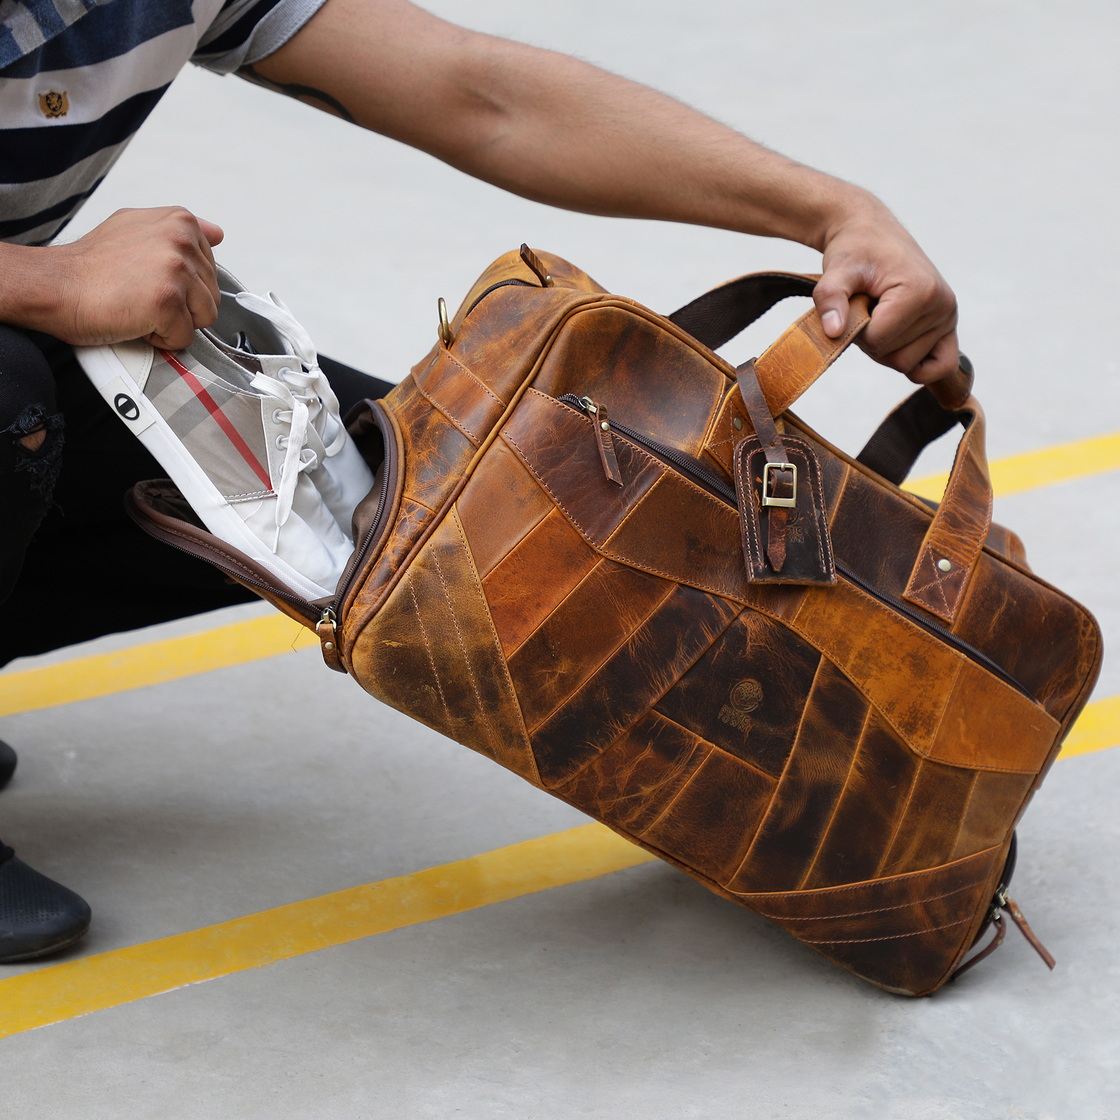 John Leather Travel Duffle Bag